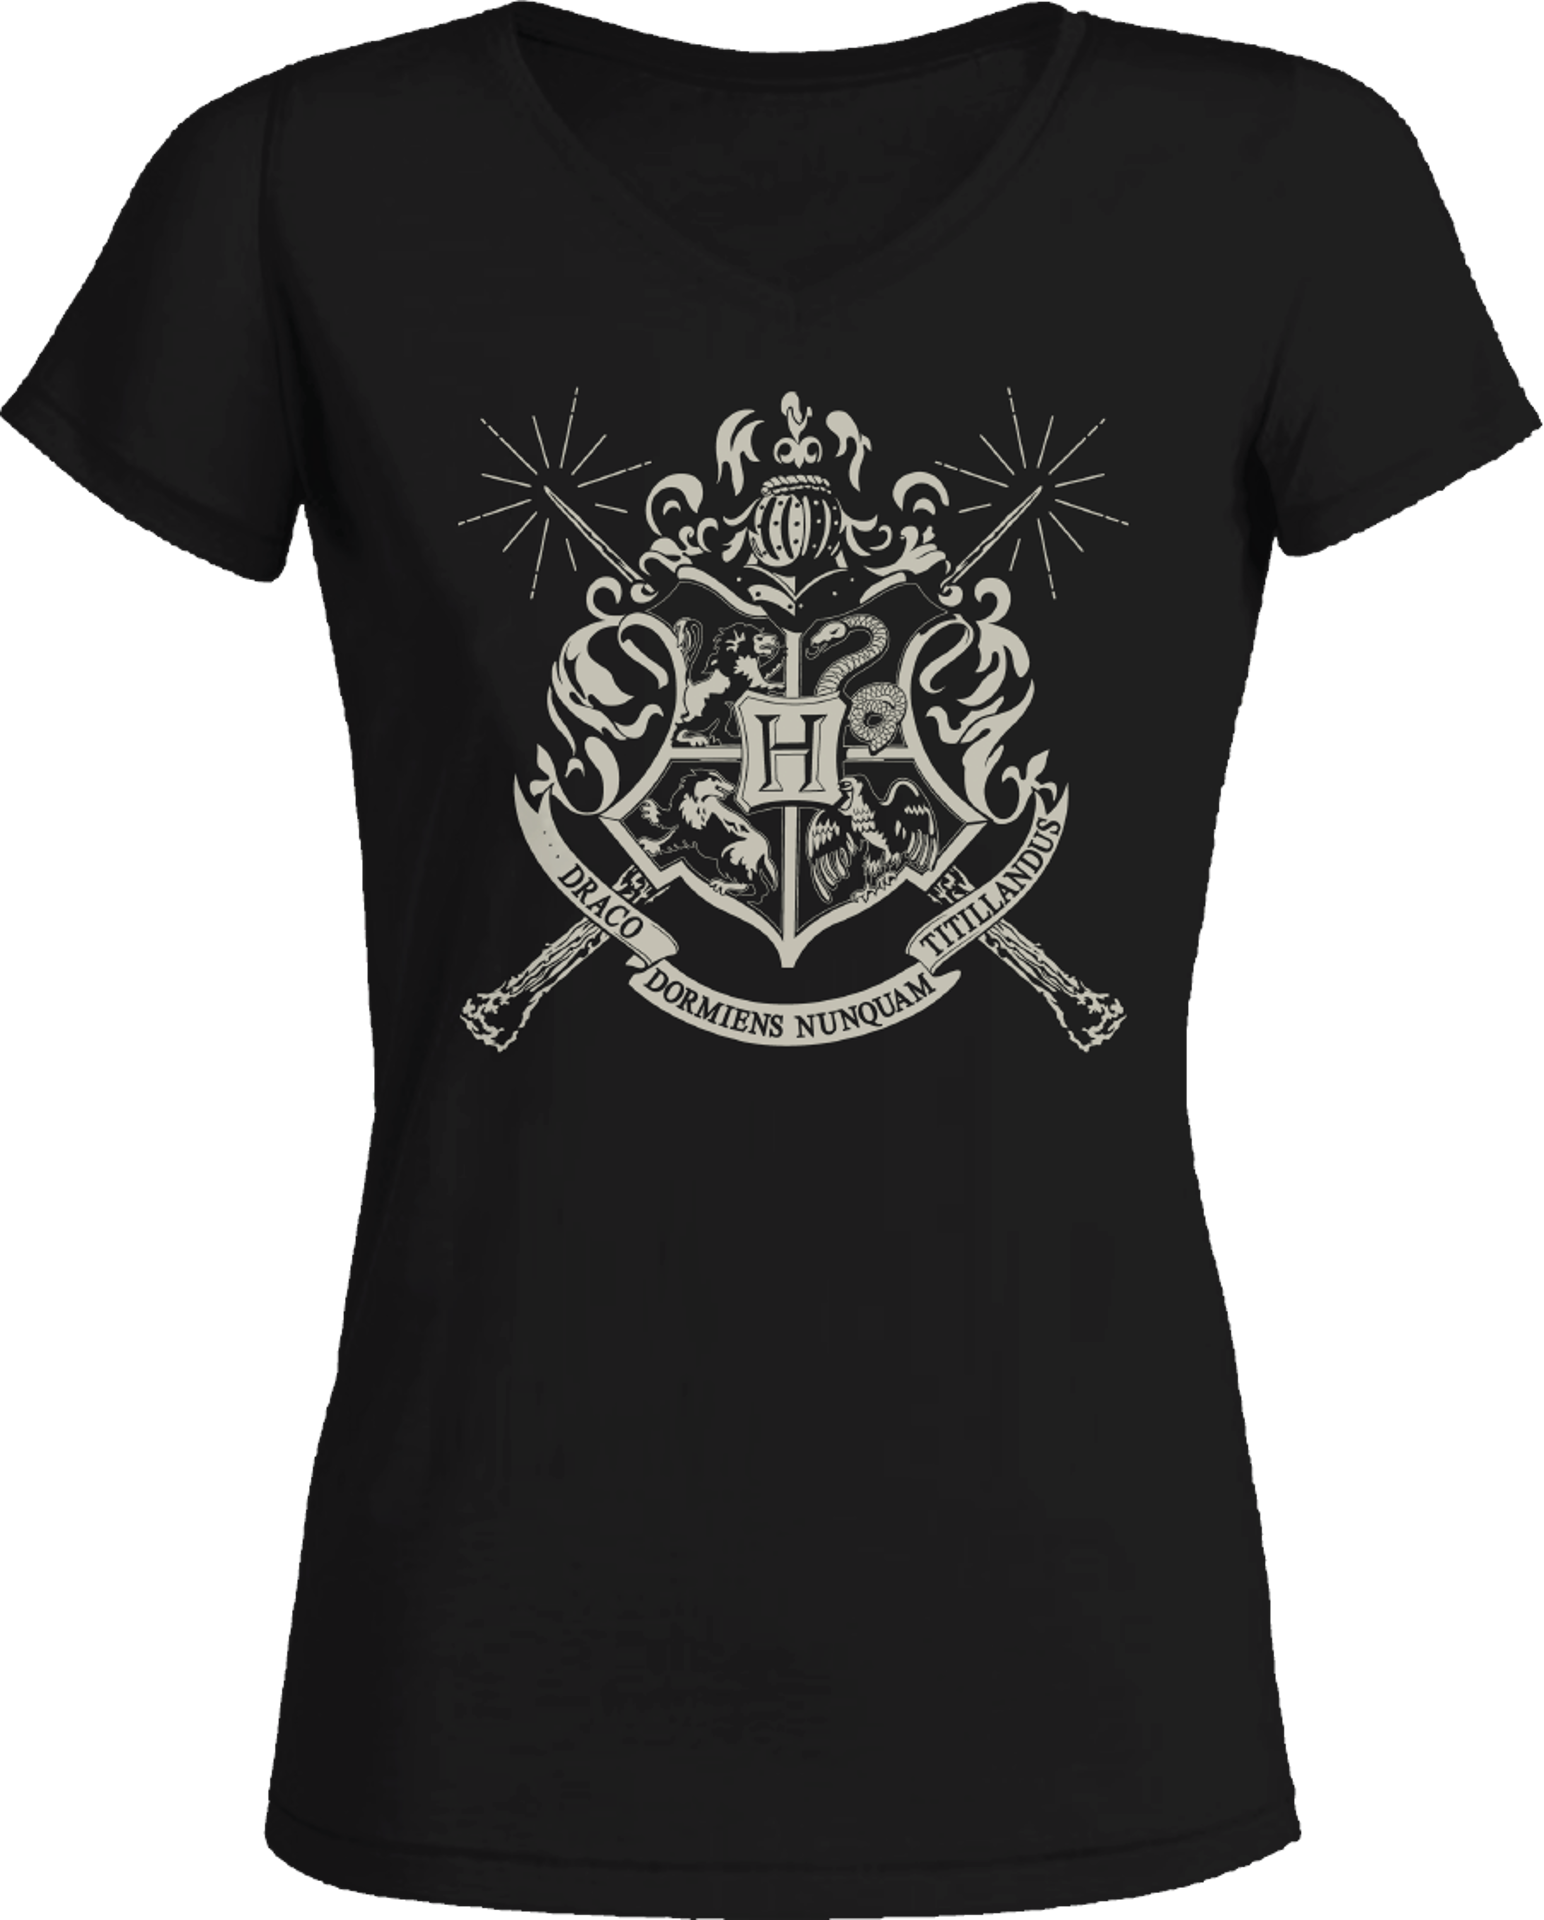 Harry Potter - 4 Houses Emblems Black Women T-Shirt XL